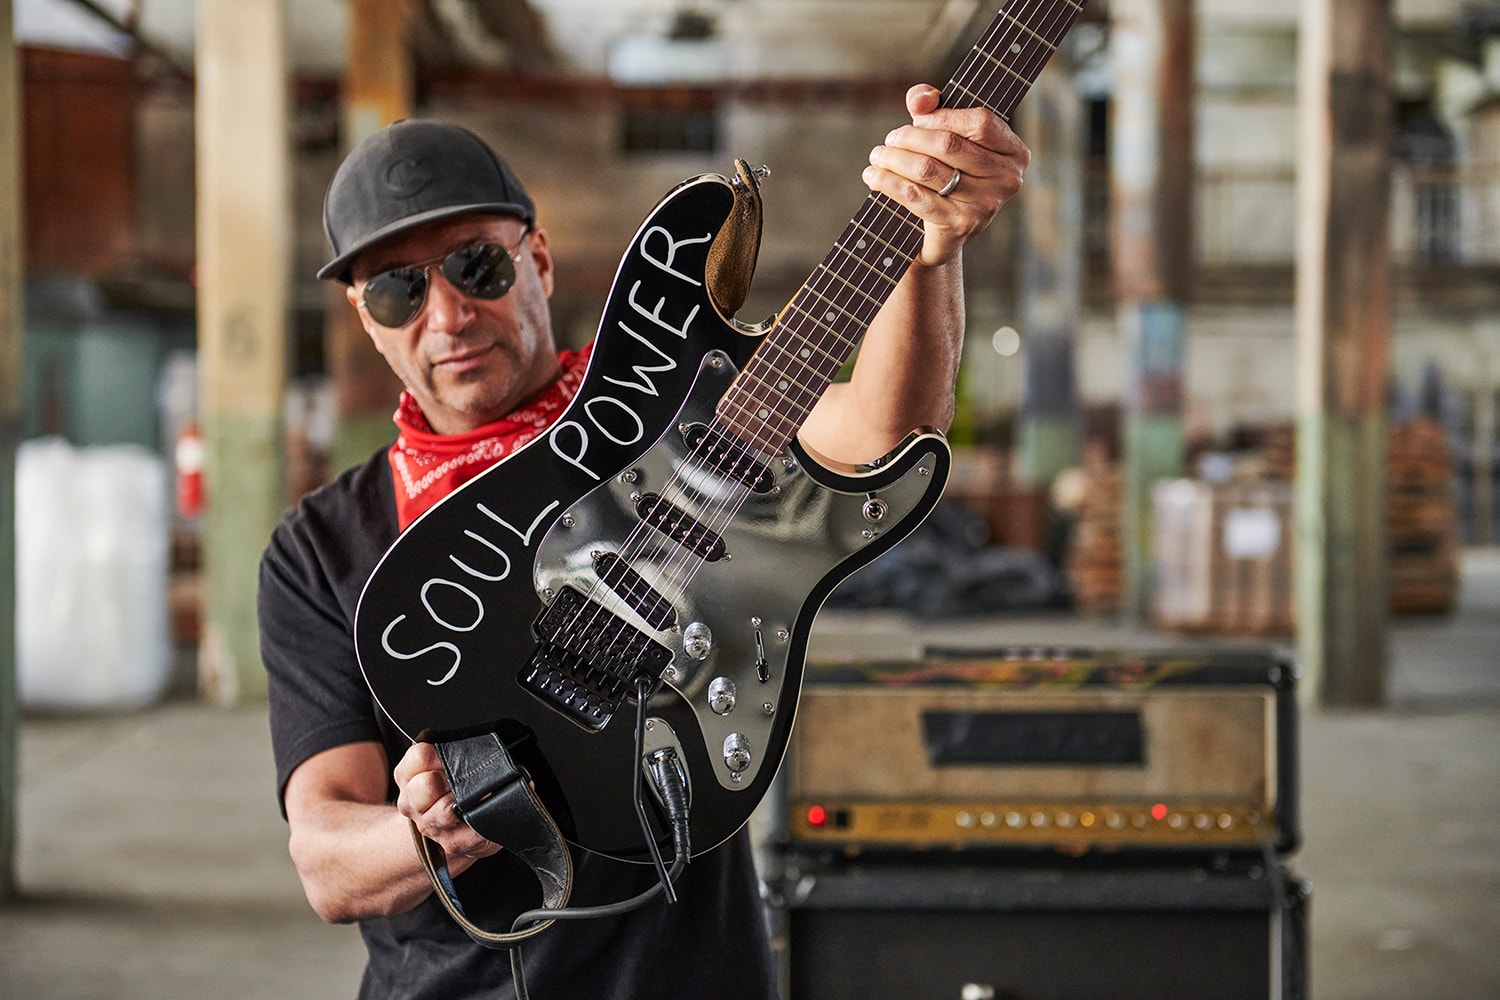 Fender Tom Morello "Soul Power" Stratocaster Guitar Info Rage Against the Machine Audioslave music guitar rock n roll distortion 